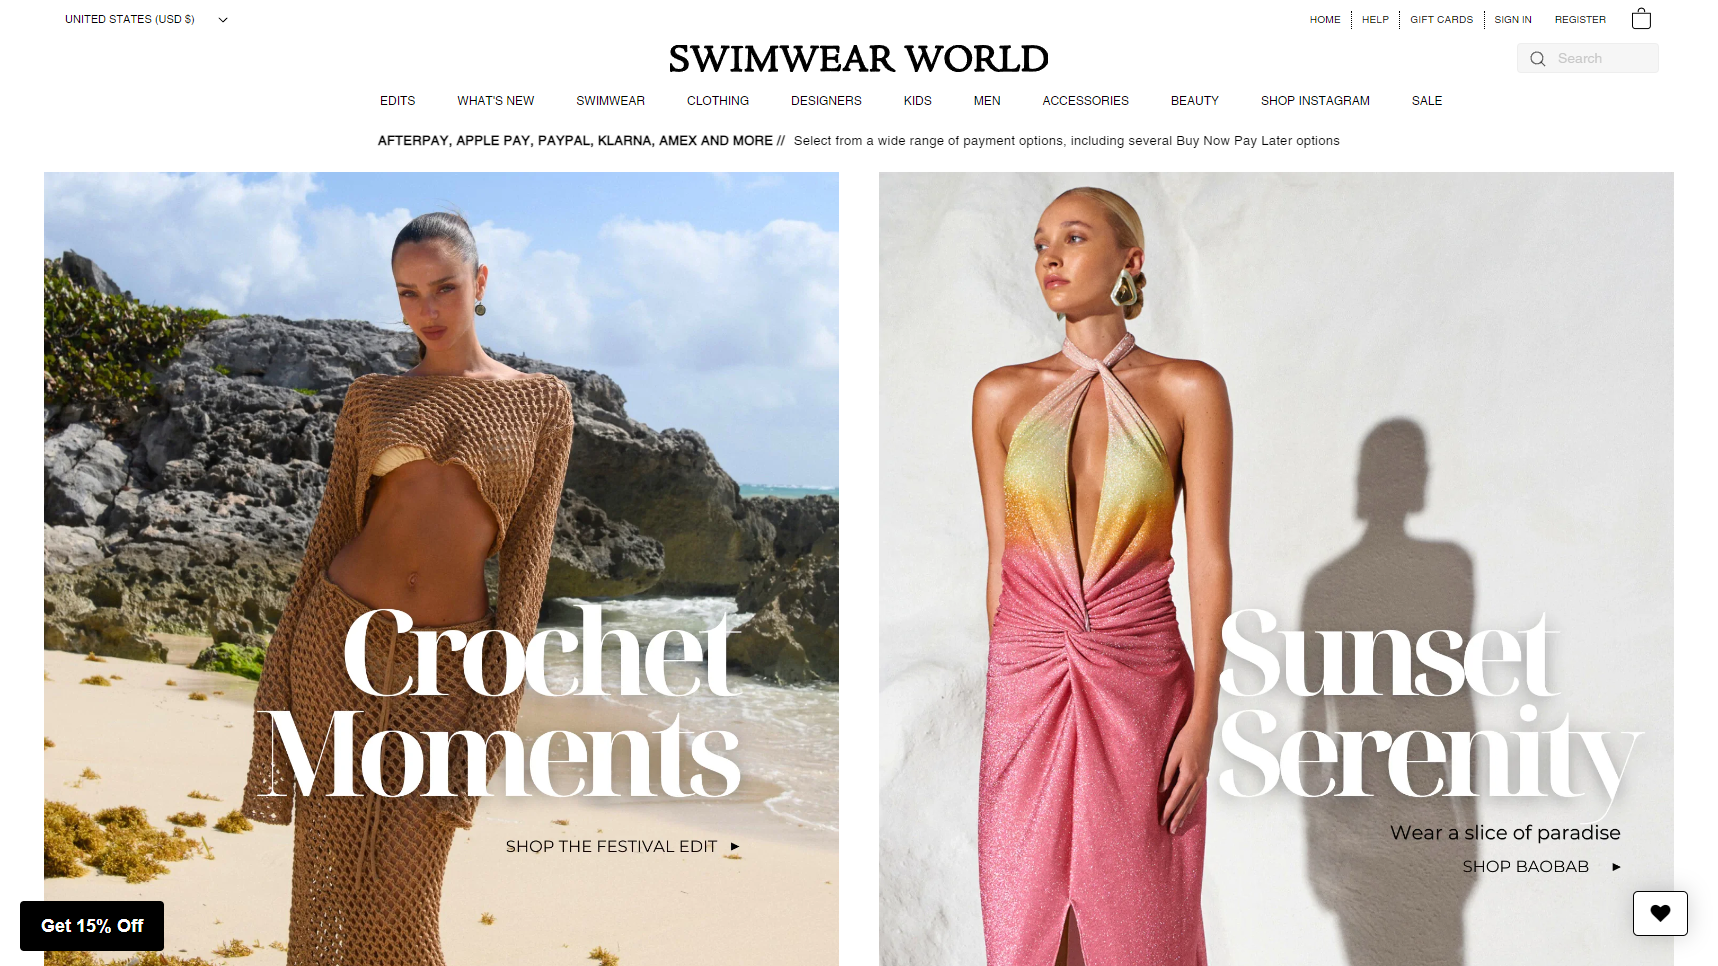 Swimwear World - Bathing Suit Manufacturer